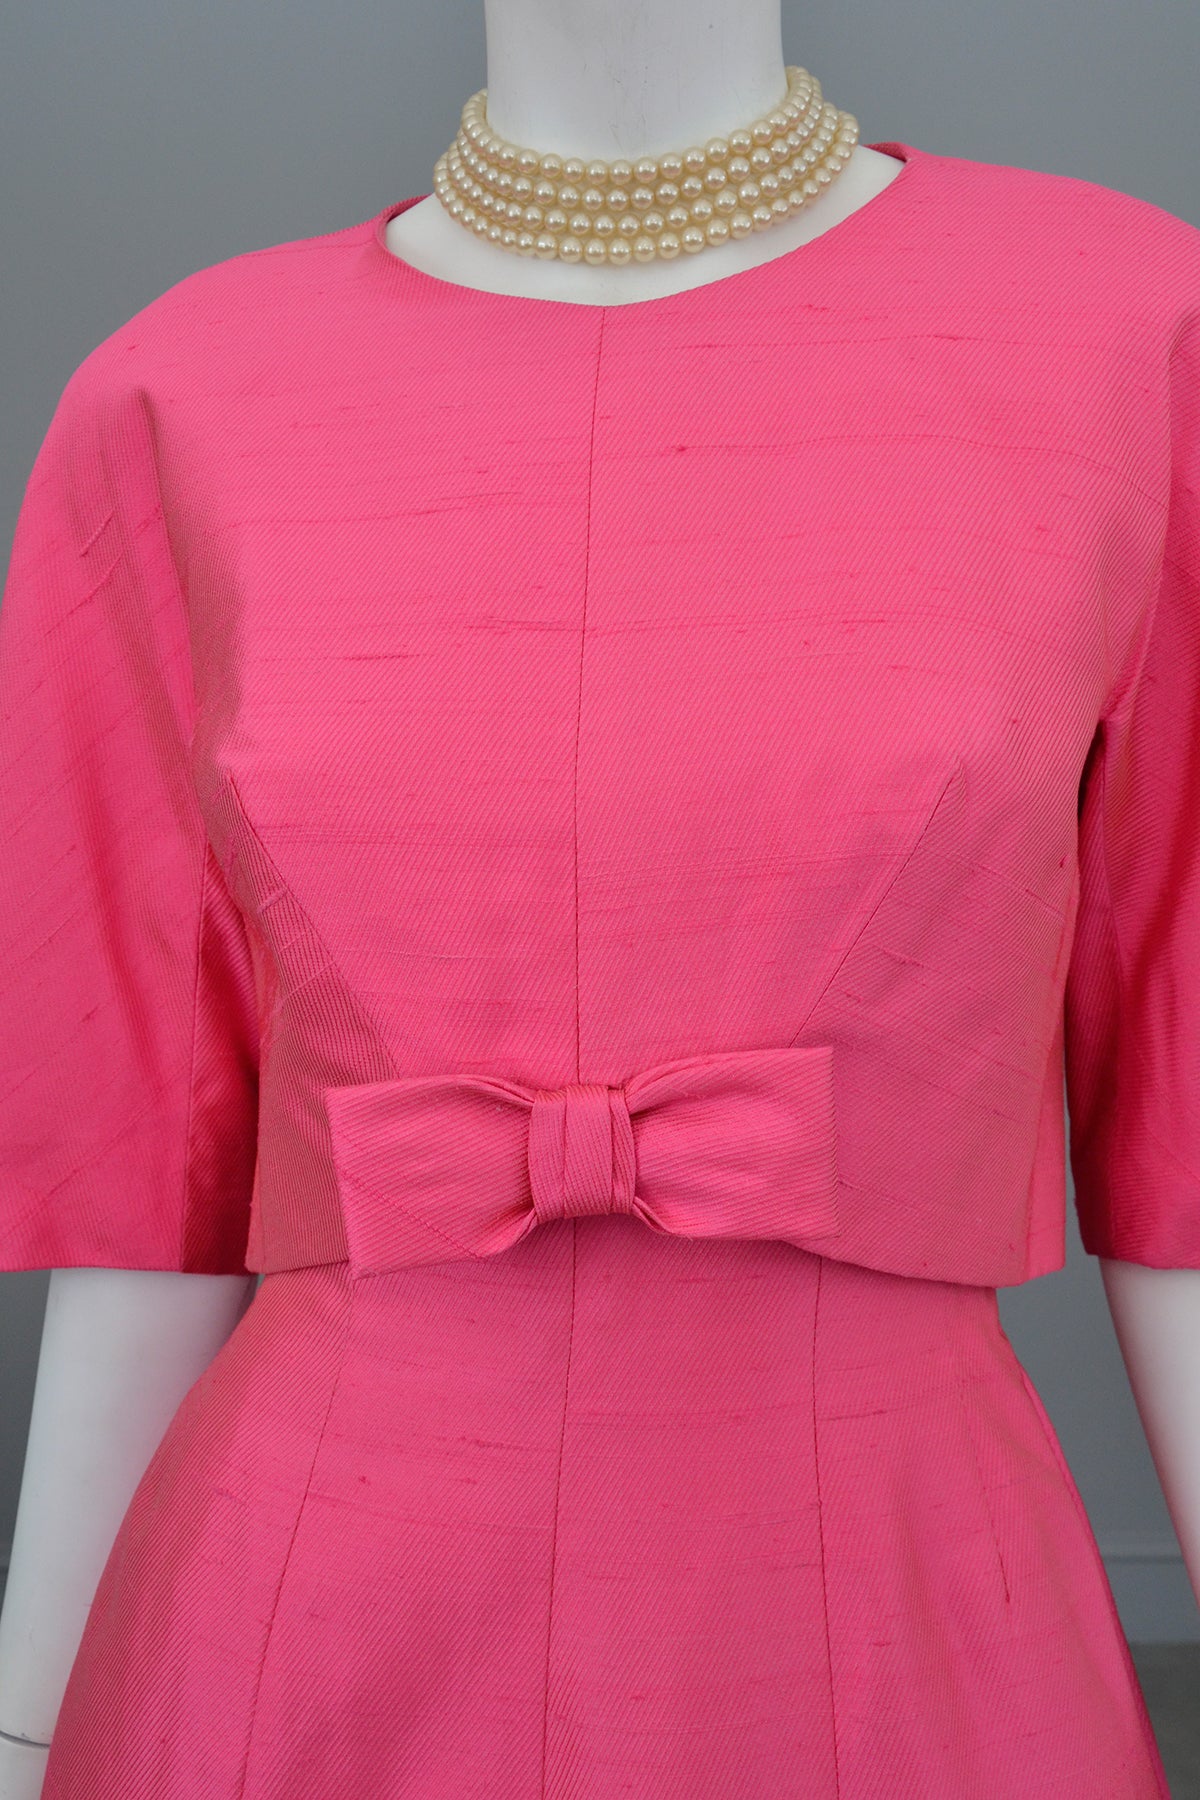 1960s Hot Pink Empire Wiggle Dress with Matching Bow Bolero